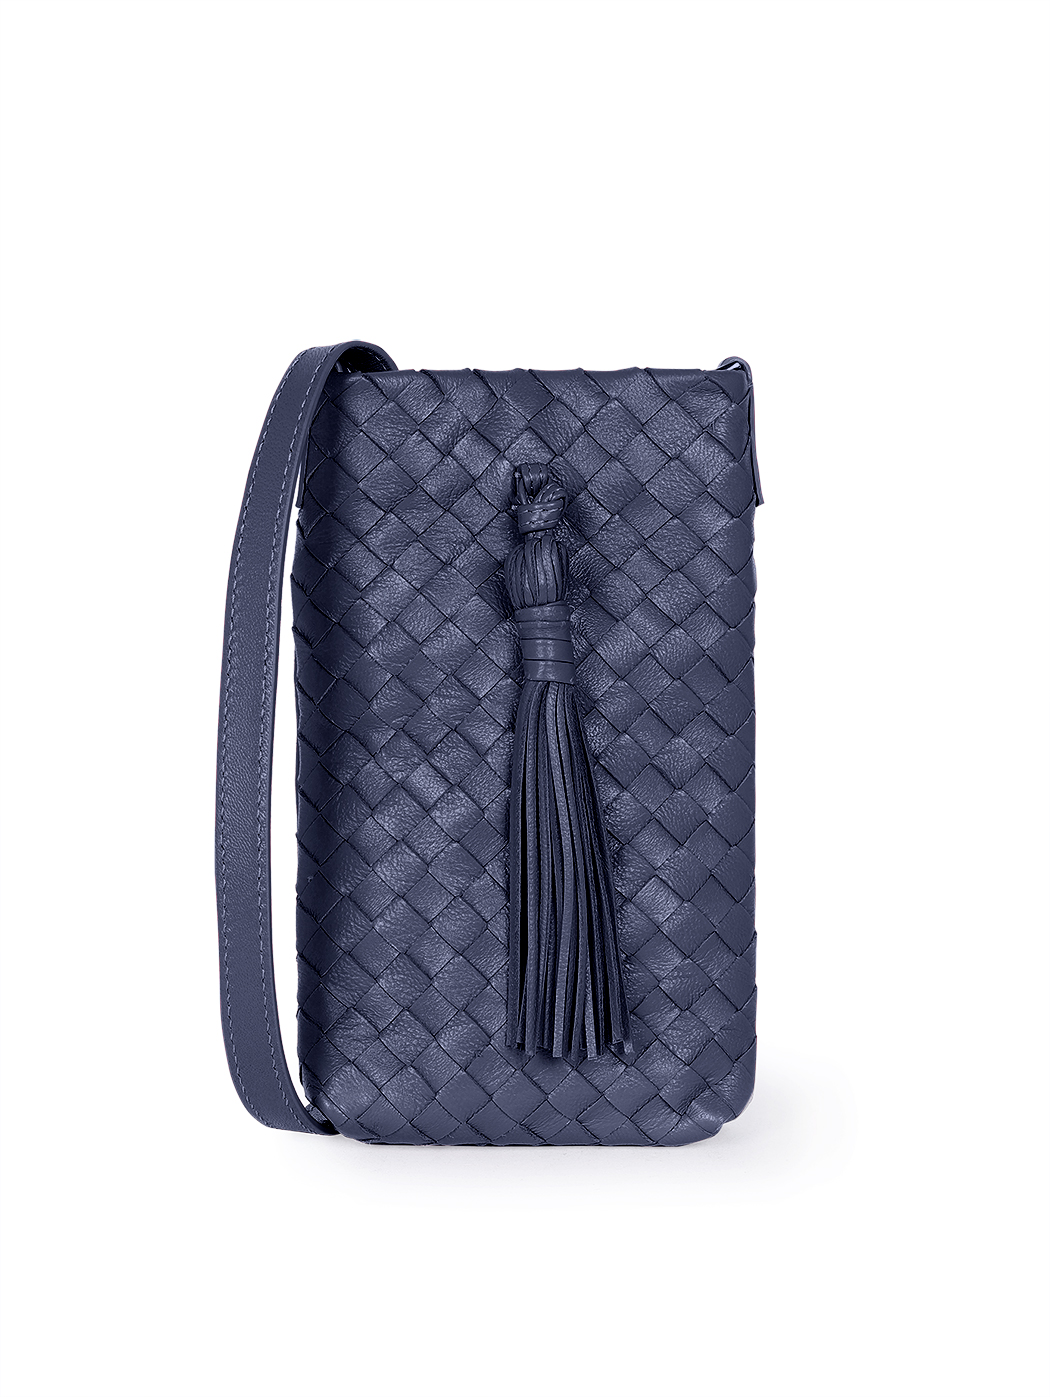 Crossbody Phone Bag Woven Leather Navy Blue